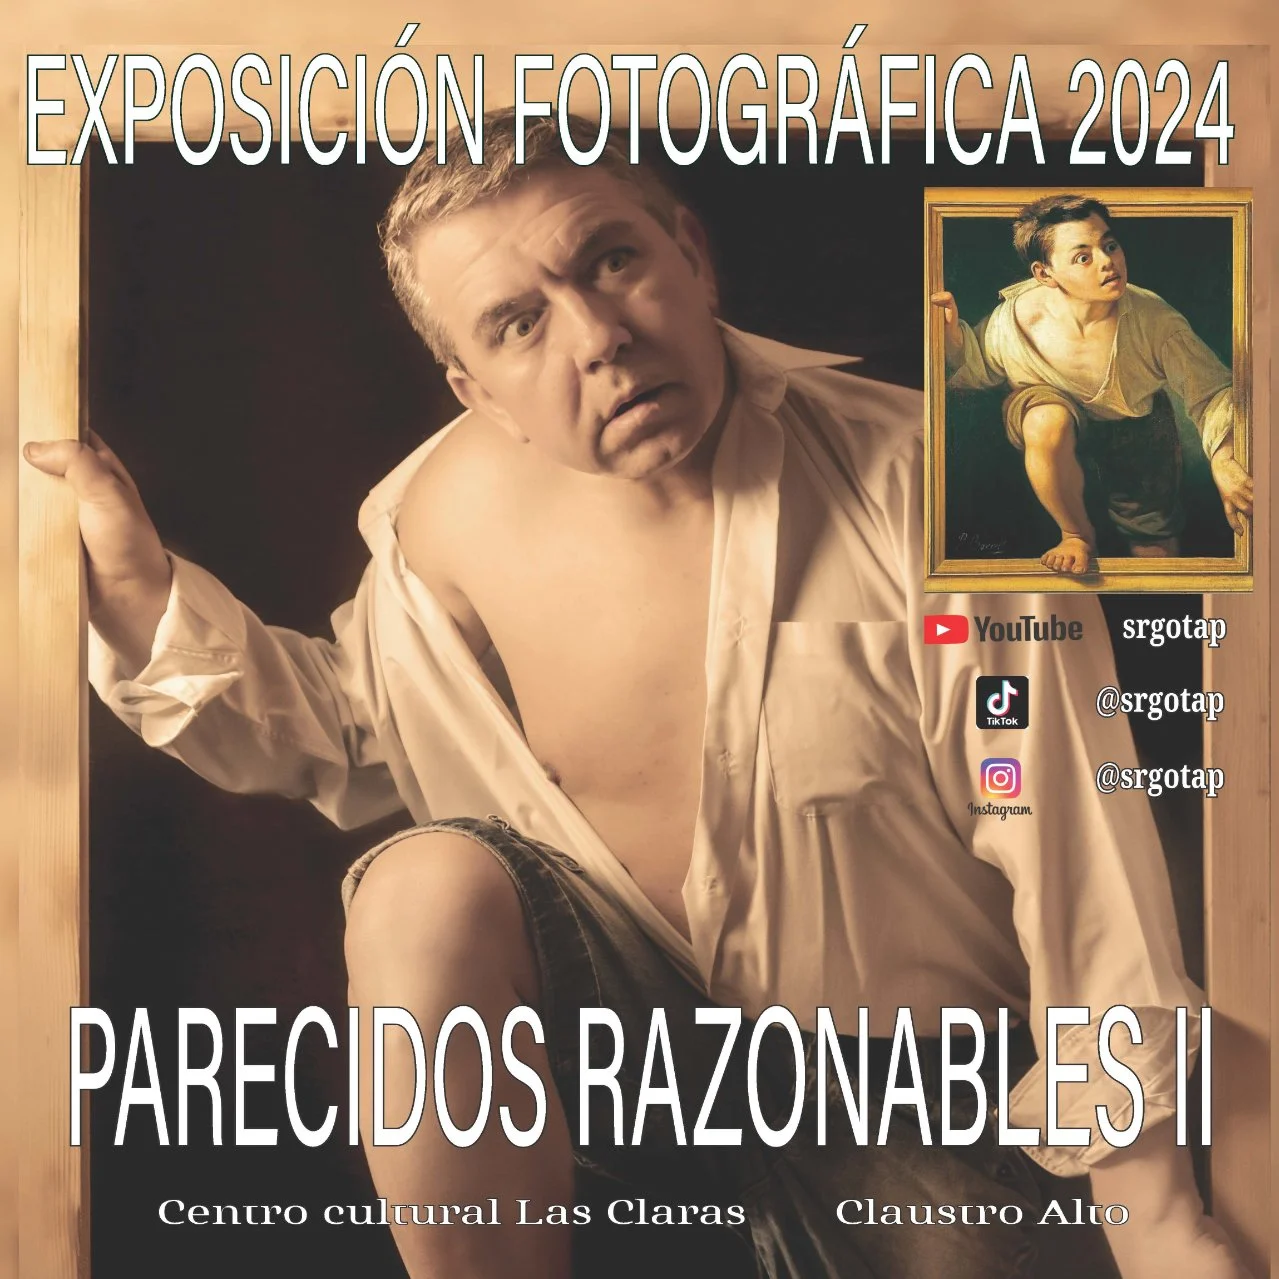 PARECIDOS RAZONABLES II - Ángel Arroyo